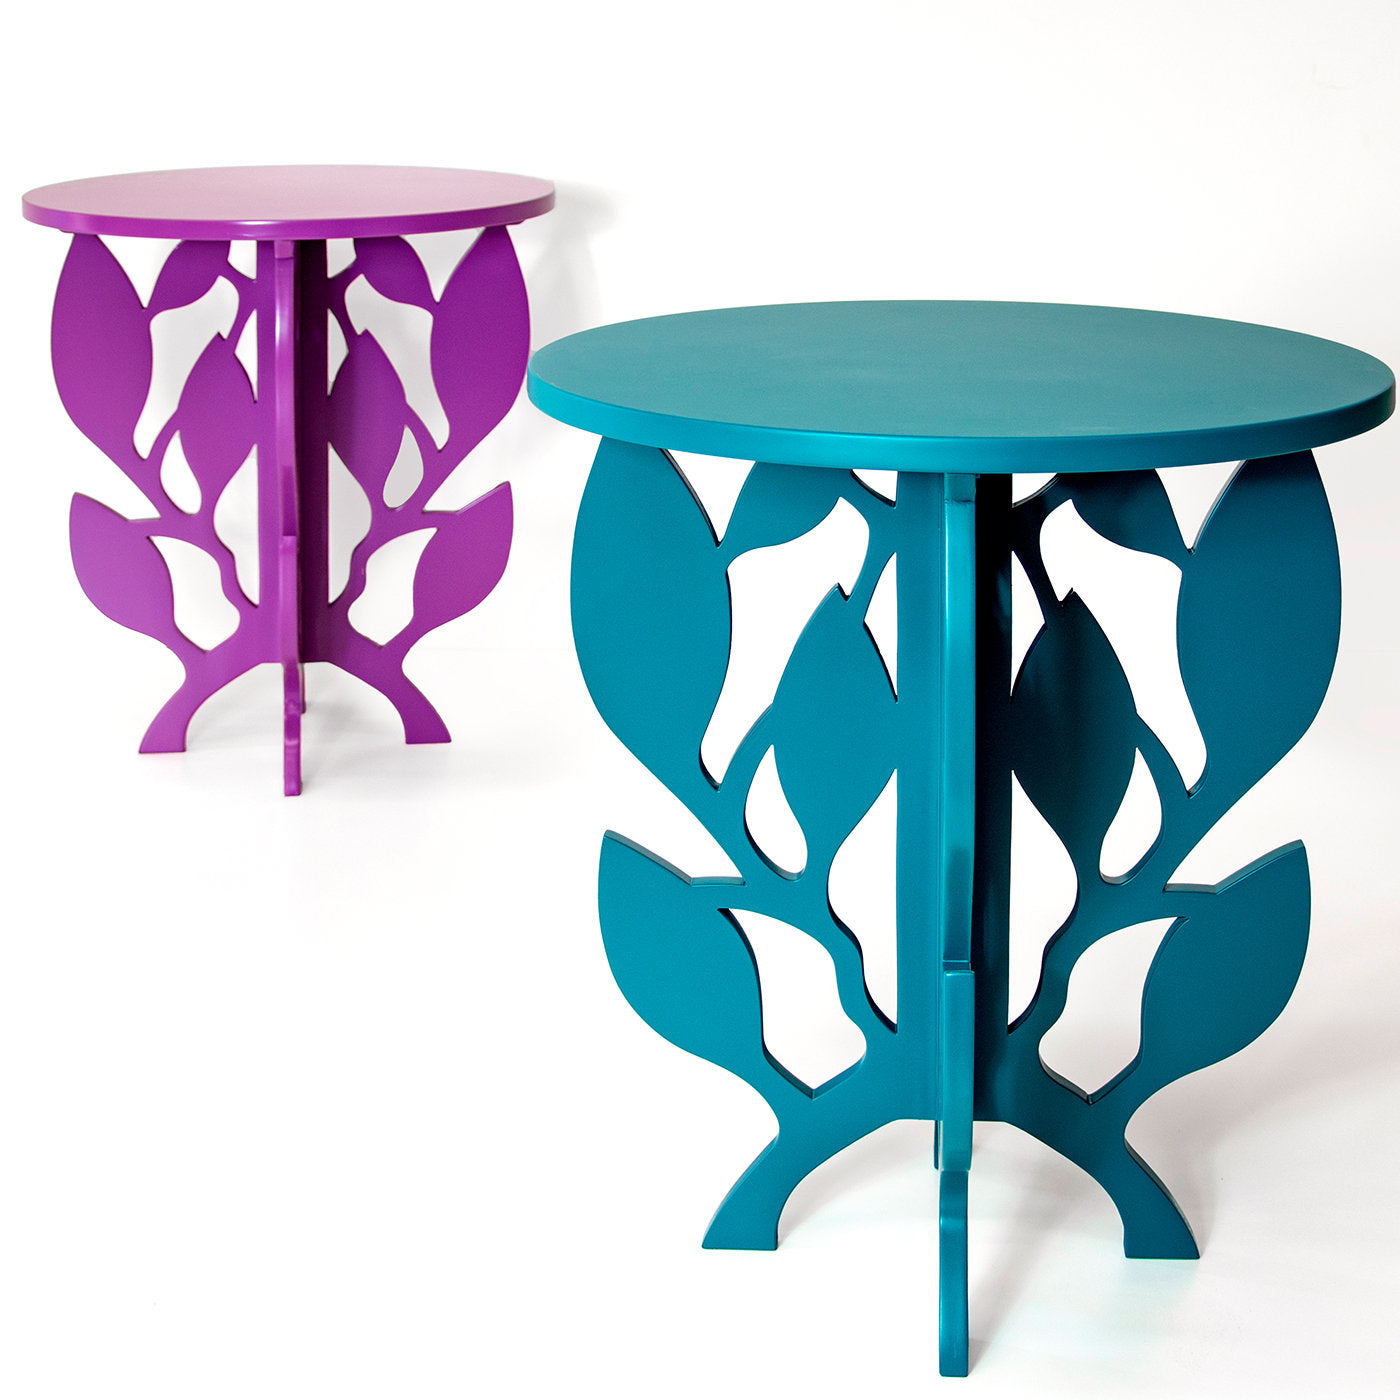 Ramy Purple Side Table by Giannella Ventura - Alternative view 2